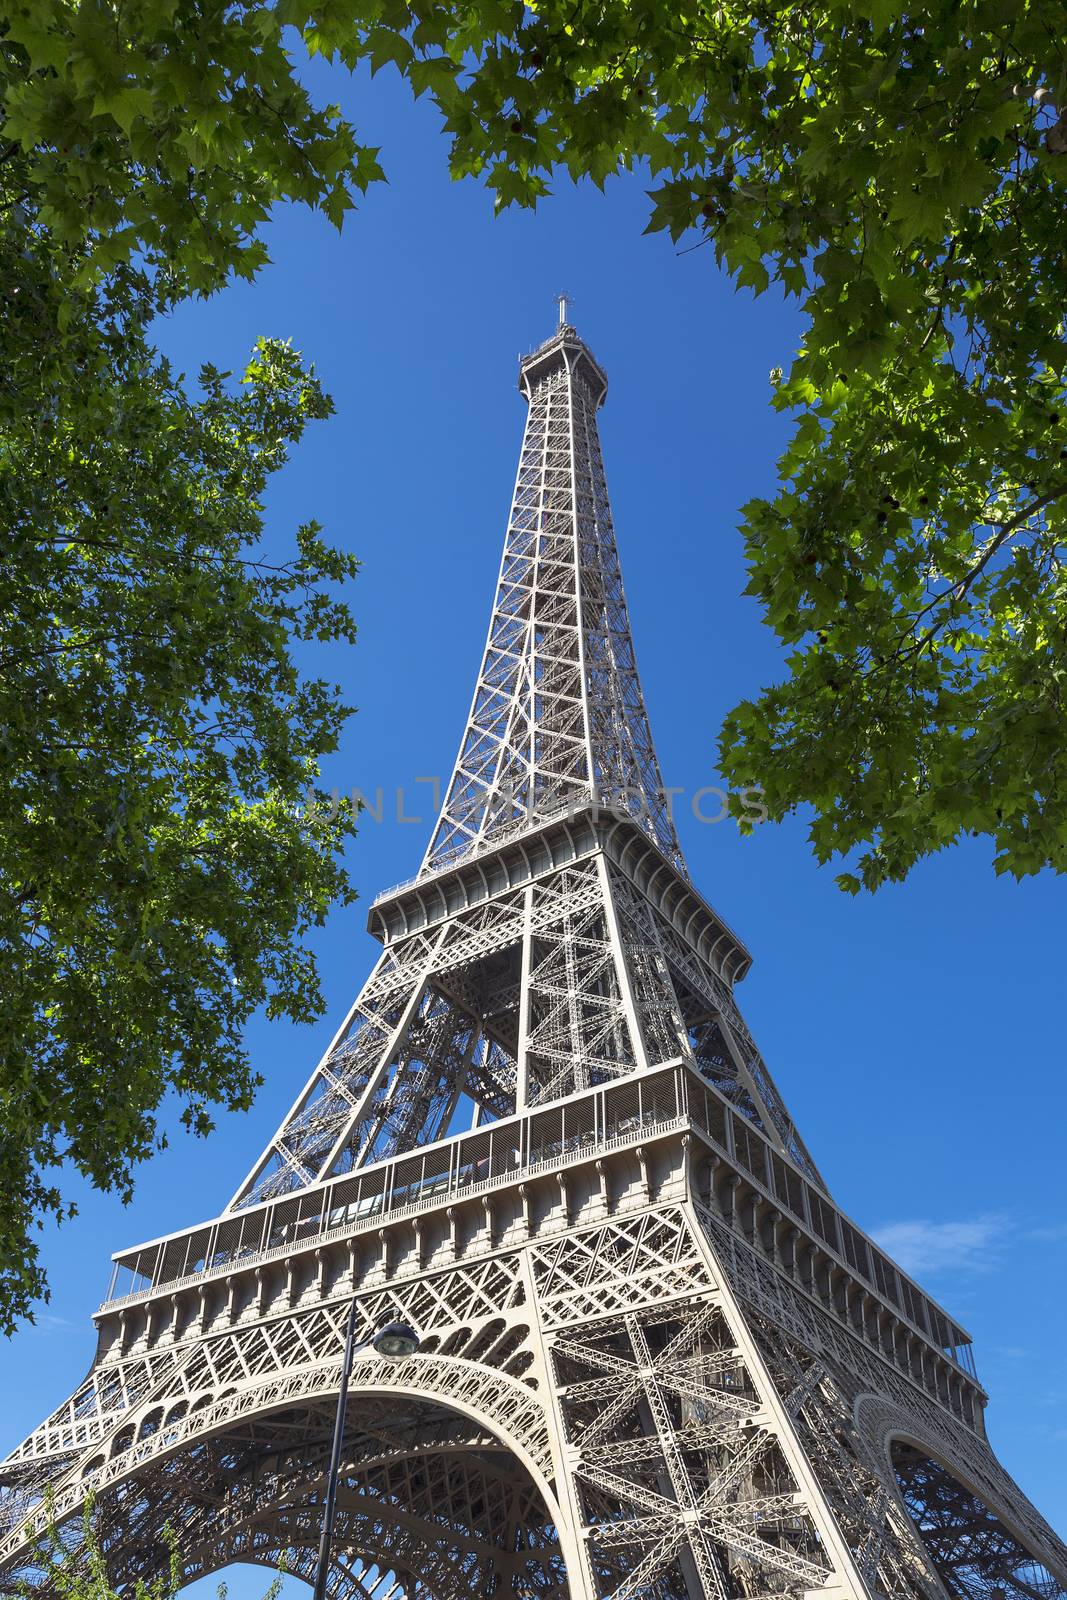 Eifel Tower with tree in blue sky, Paris.